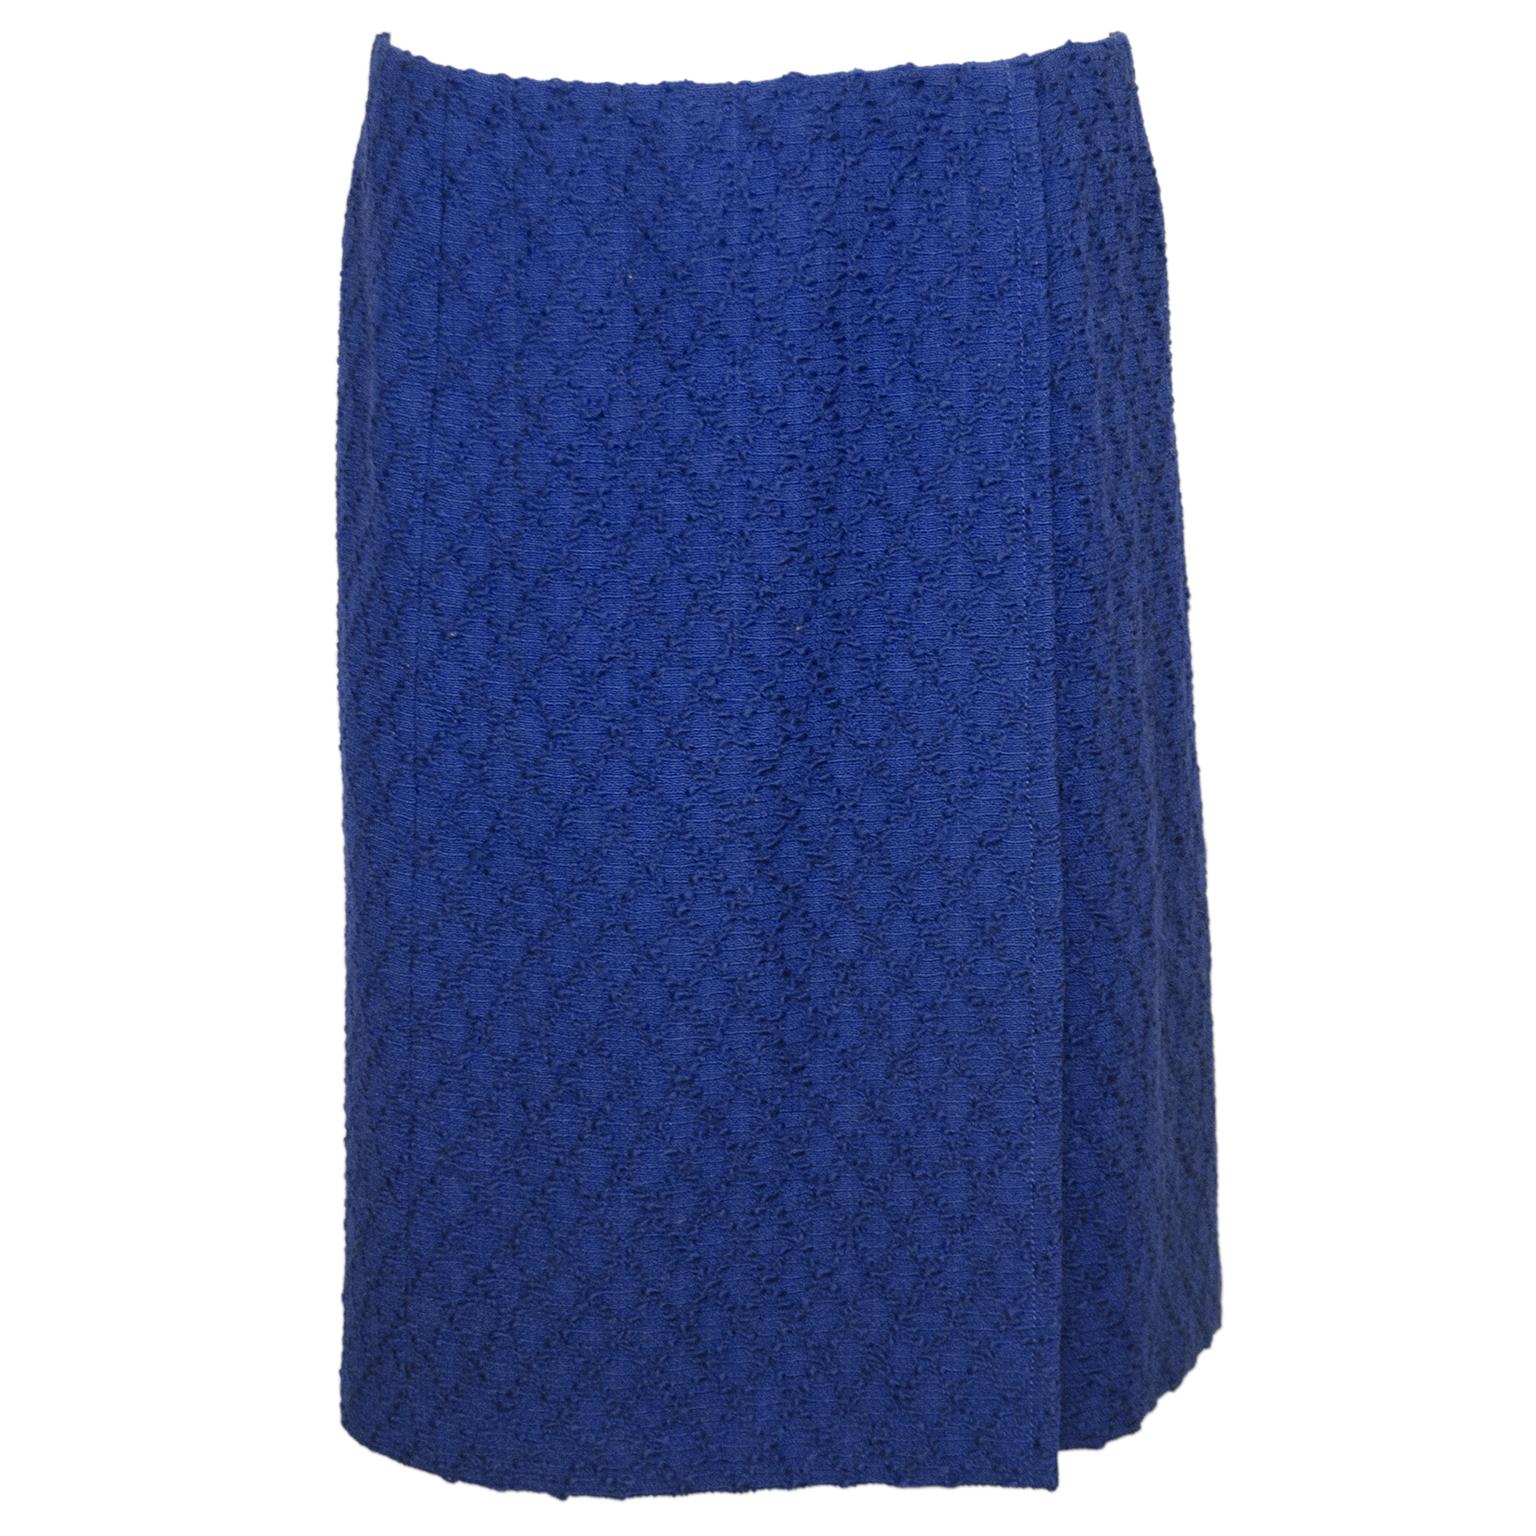 Women's 1980’s Chanel Haute Couture Royal Blue Skirt Suit For Sale